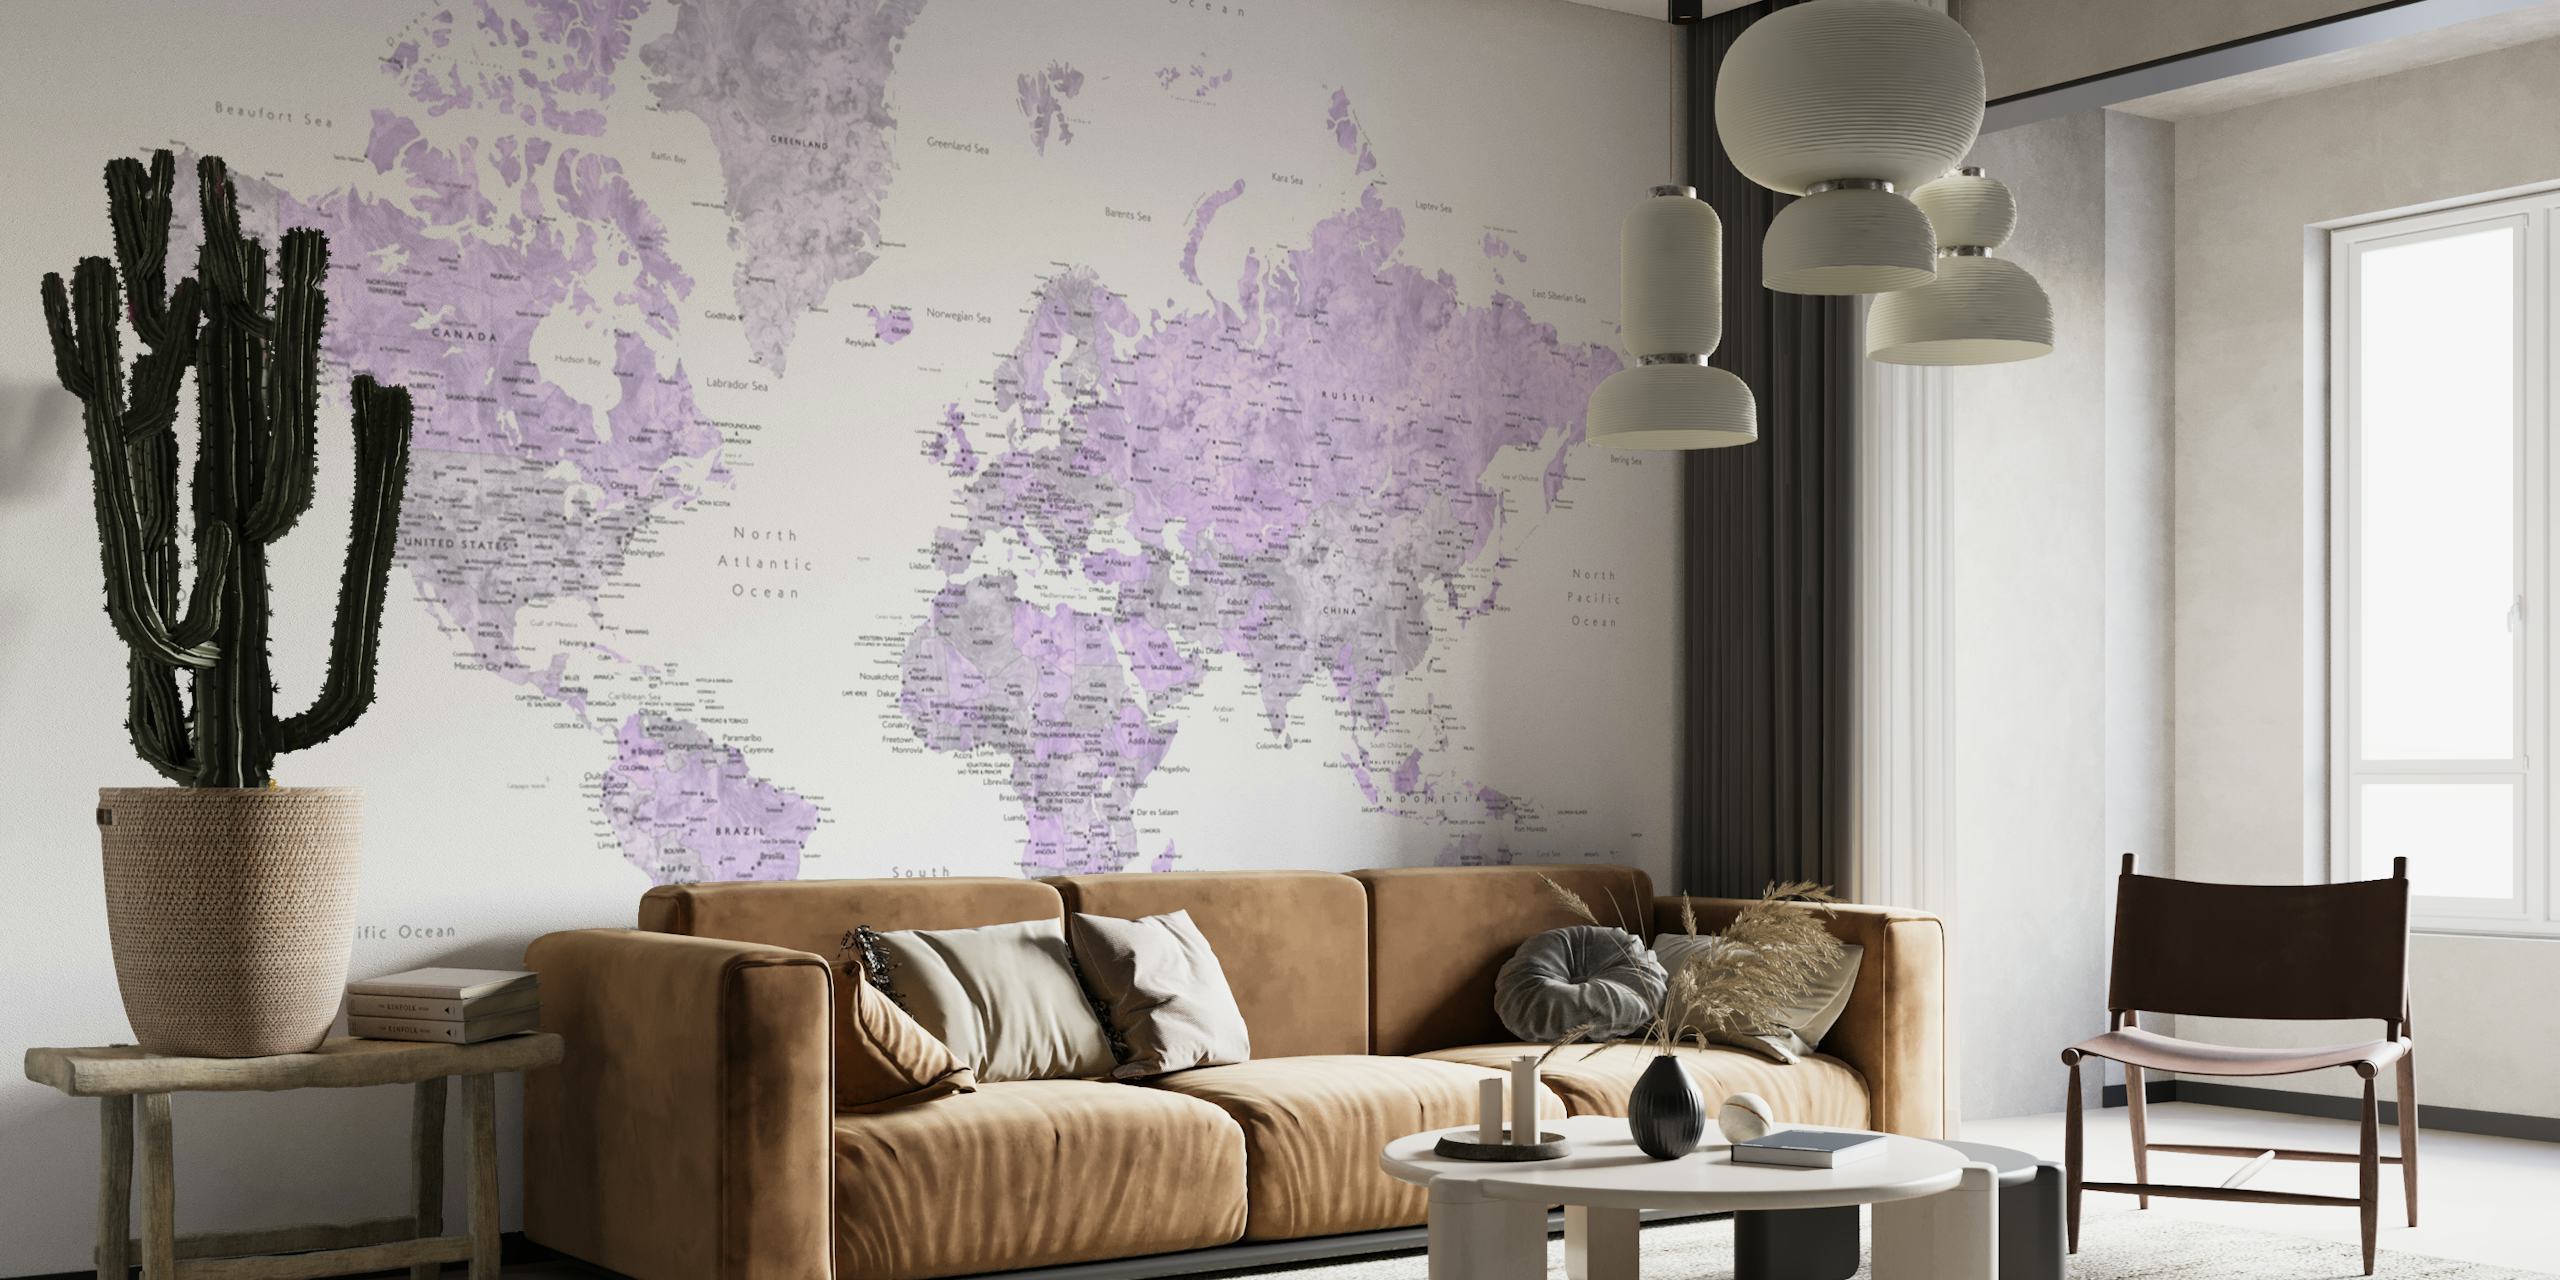 World map with cities Tanya papel pintado